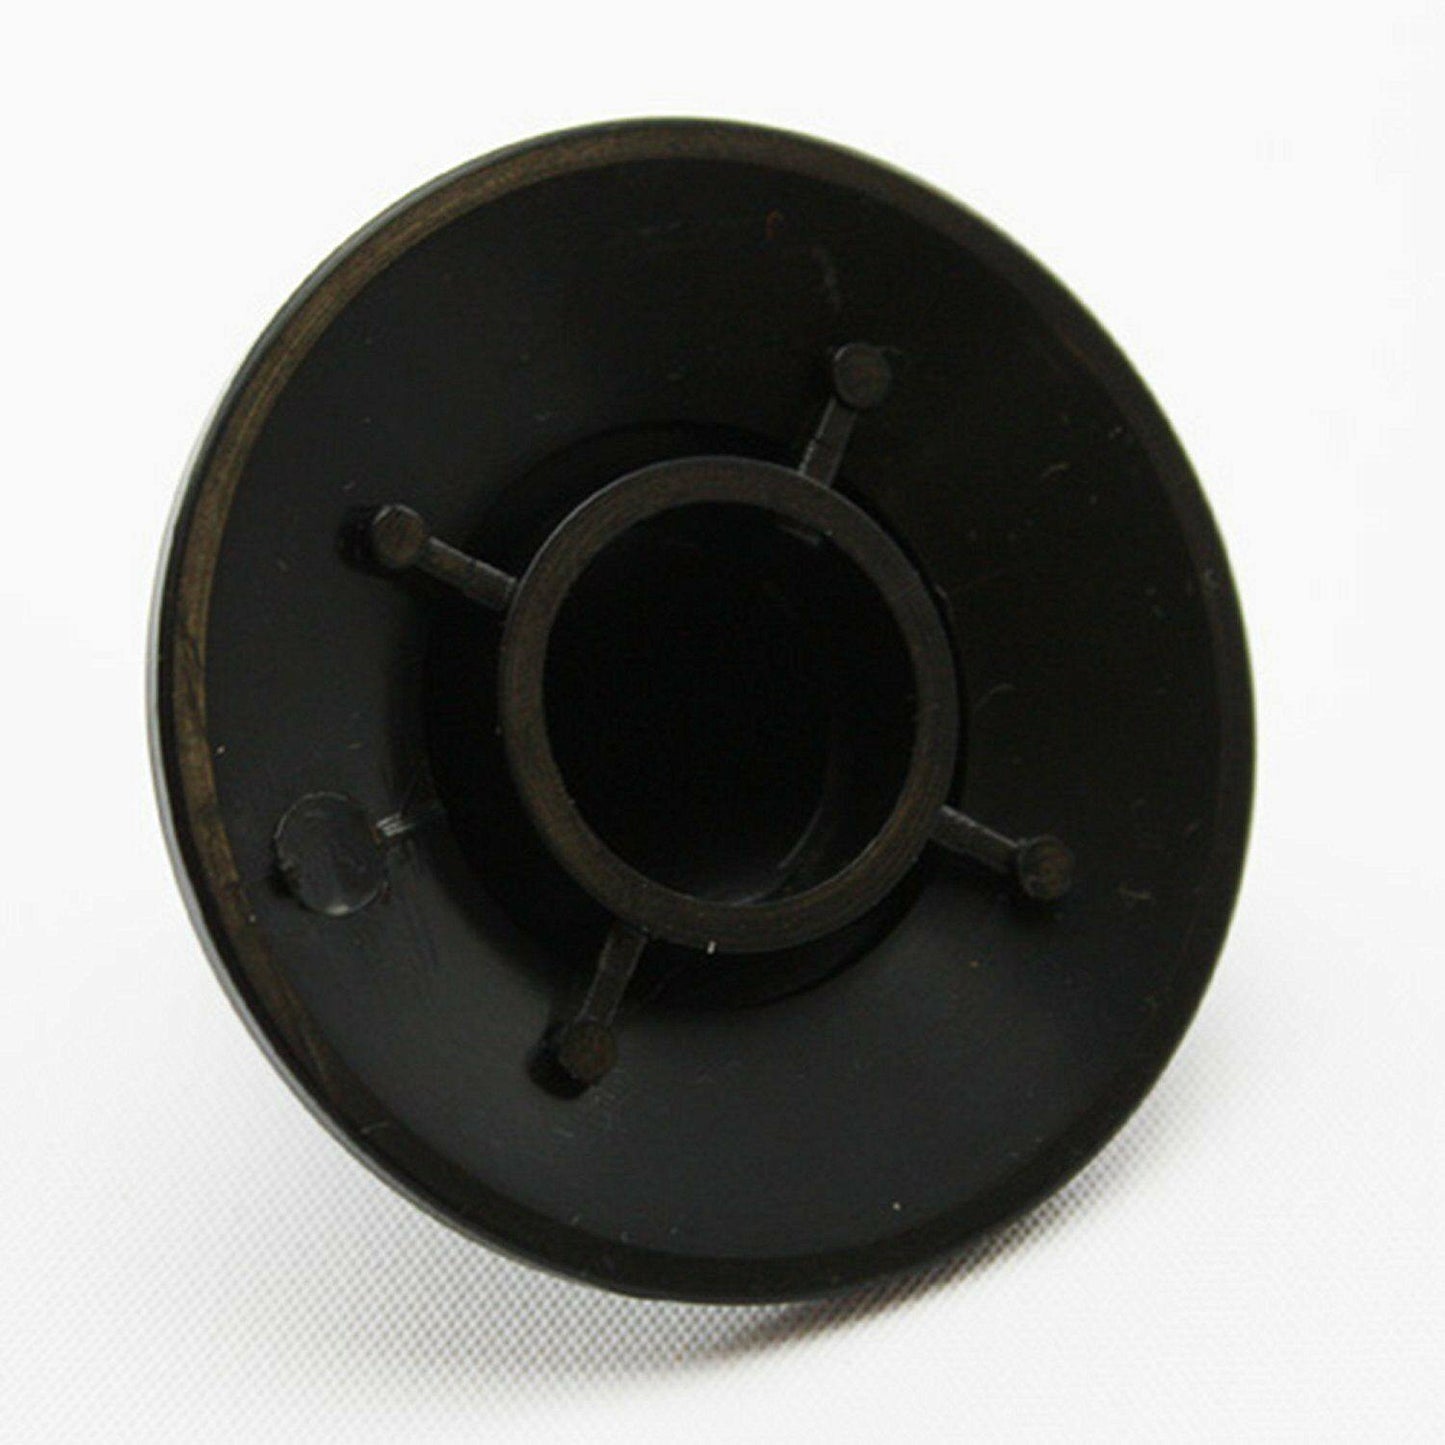 5 set Universal Stove Replace Oven Black Knob Kit Control & Griller Control Knob Sparesbarn